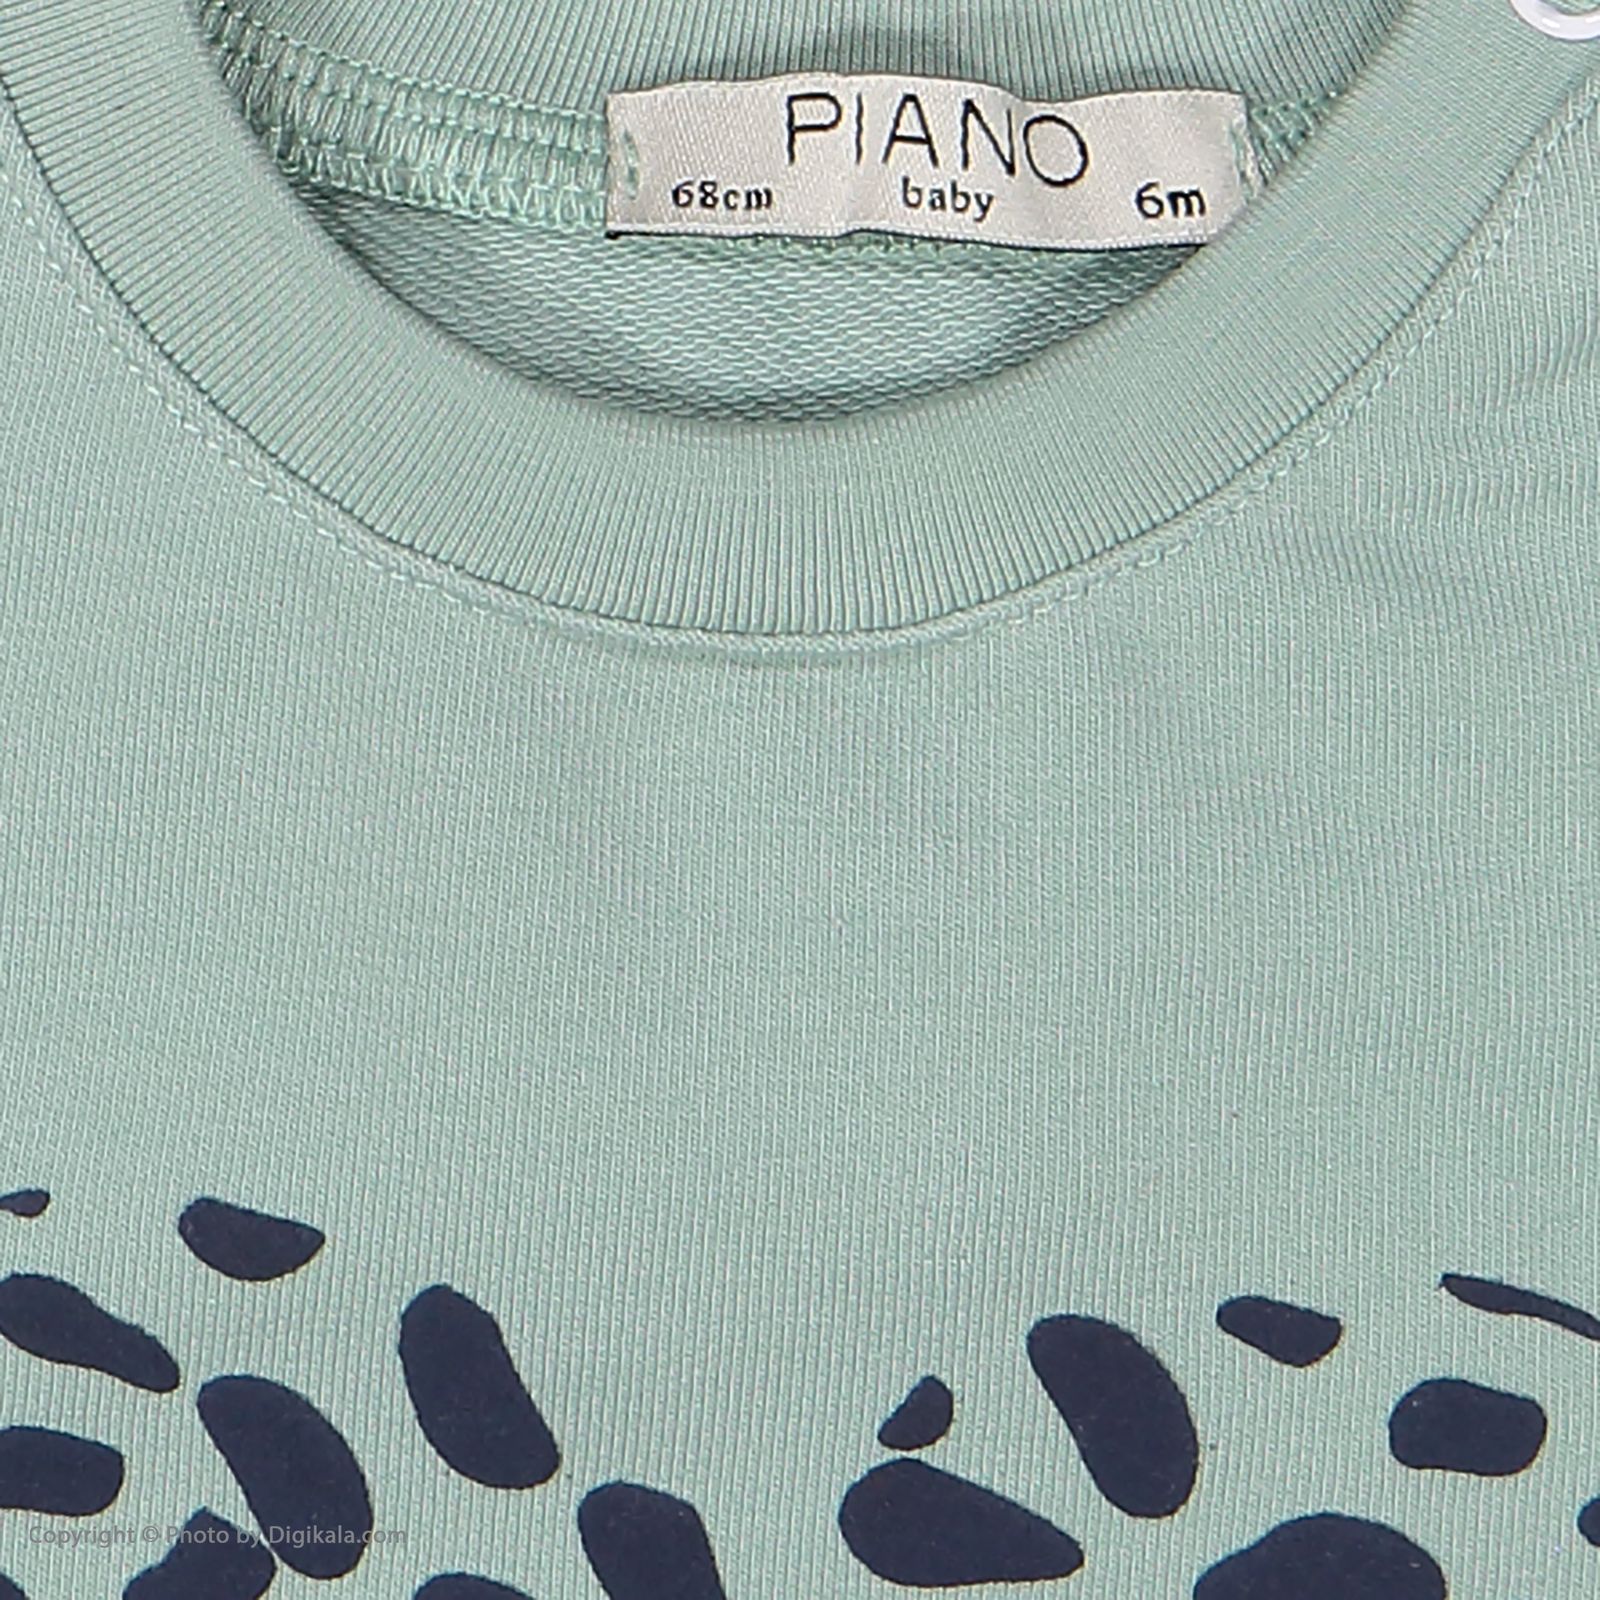 سویشرت نوزادی دخترانه پیانو مدل 1030-4358 -  - 5